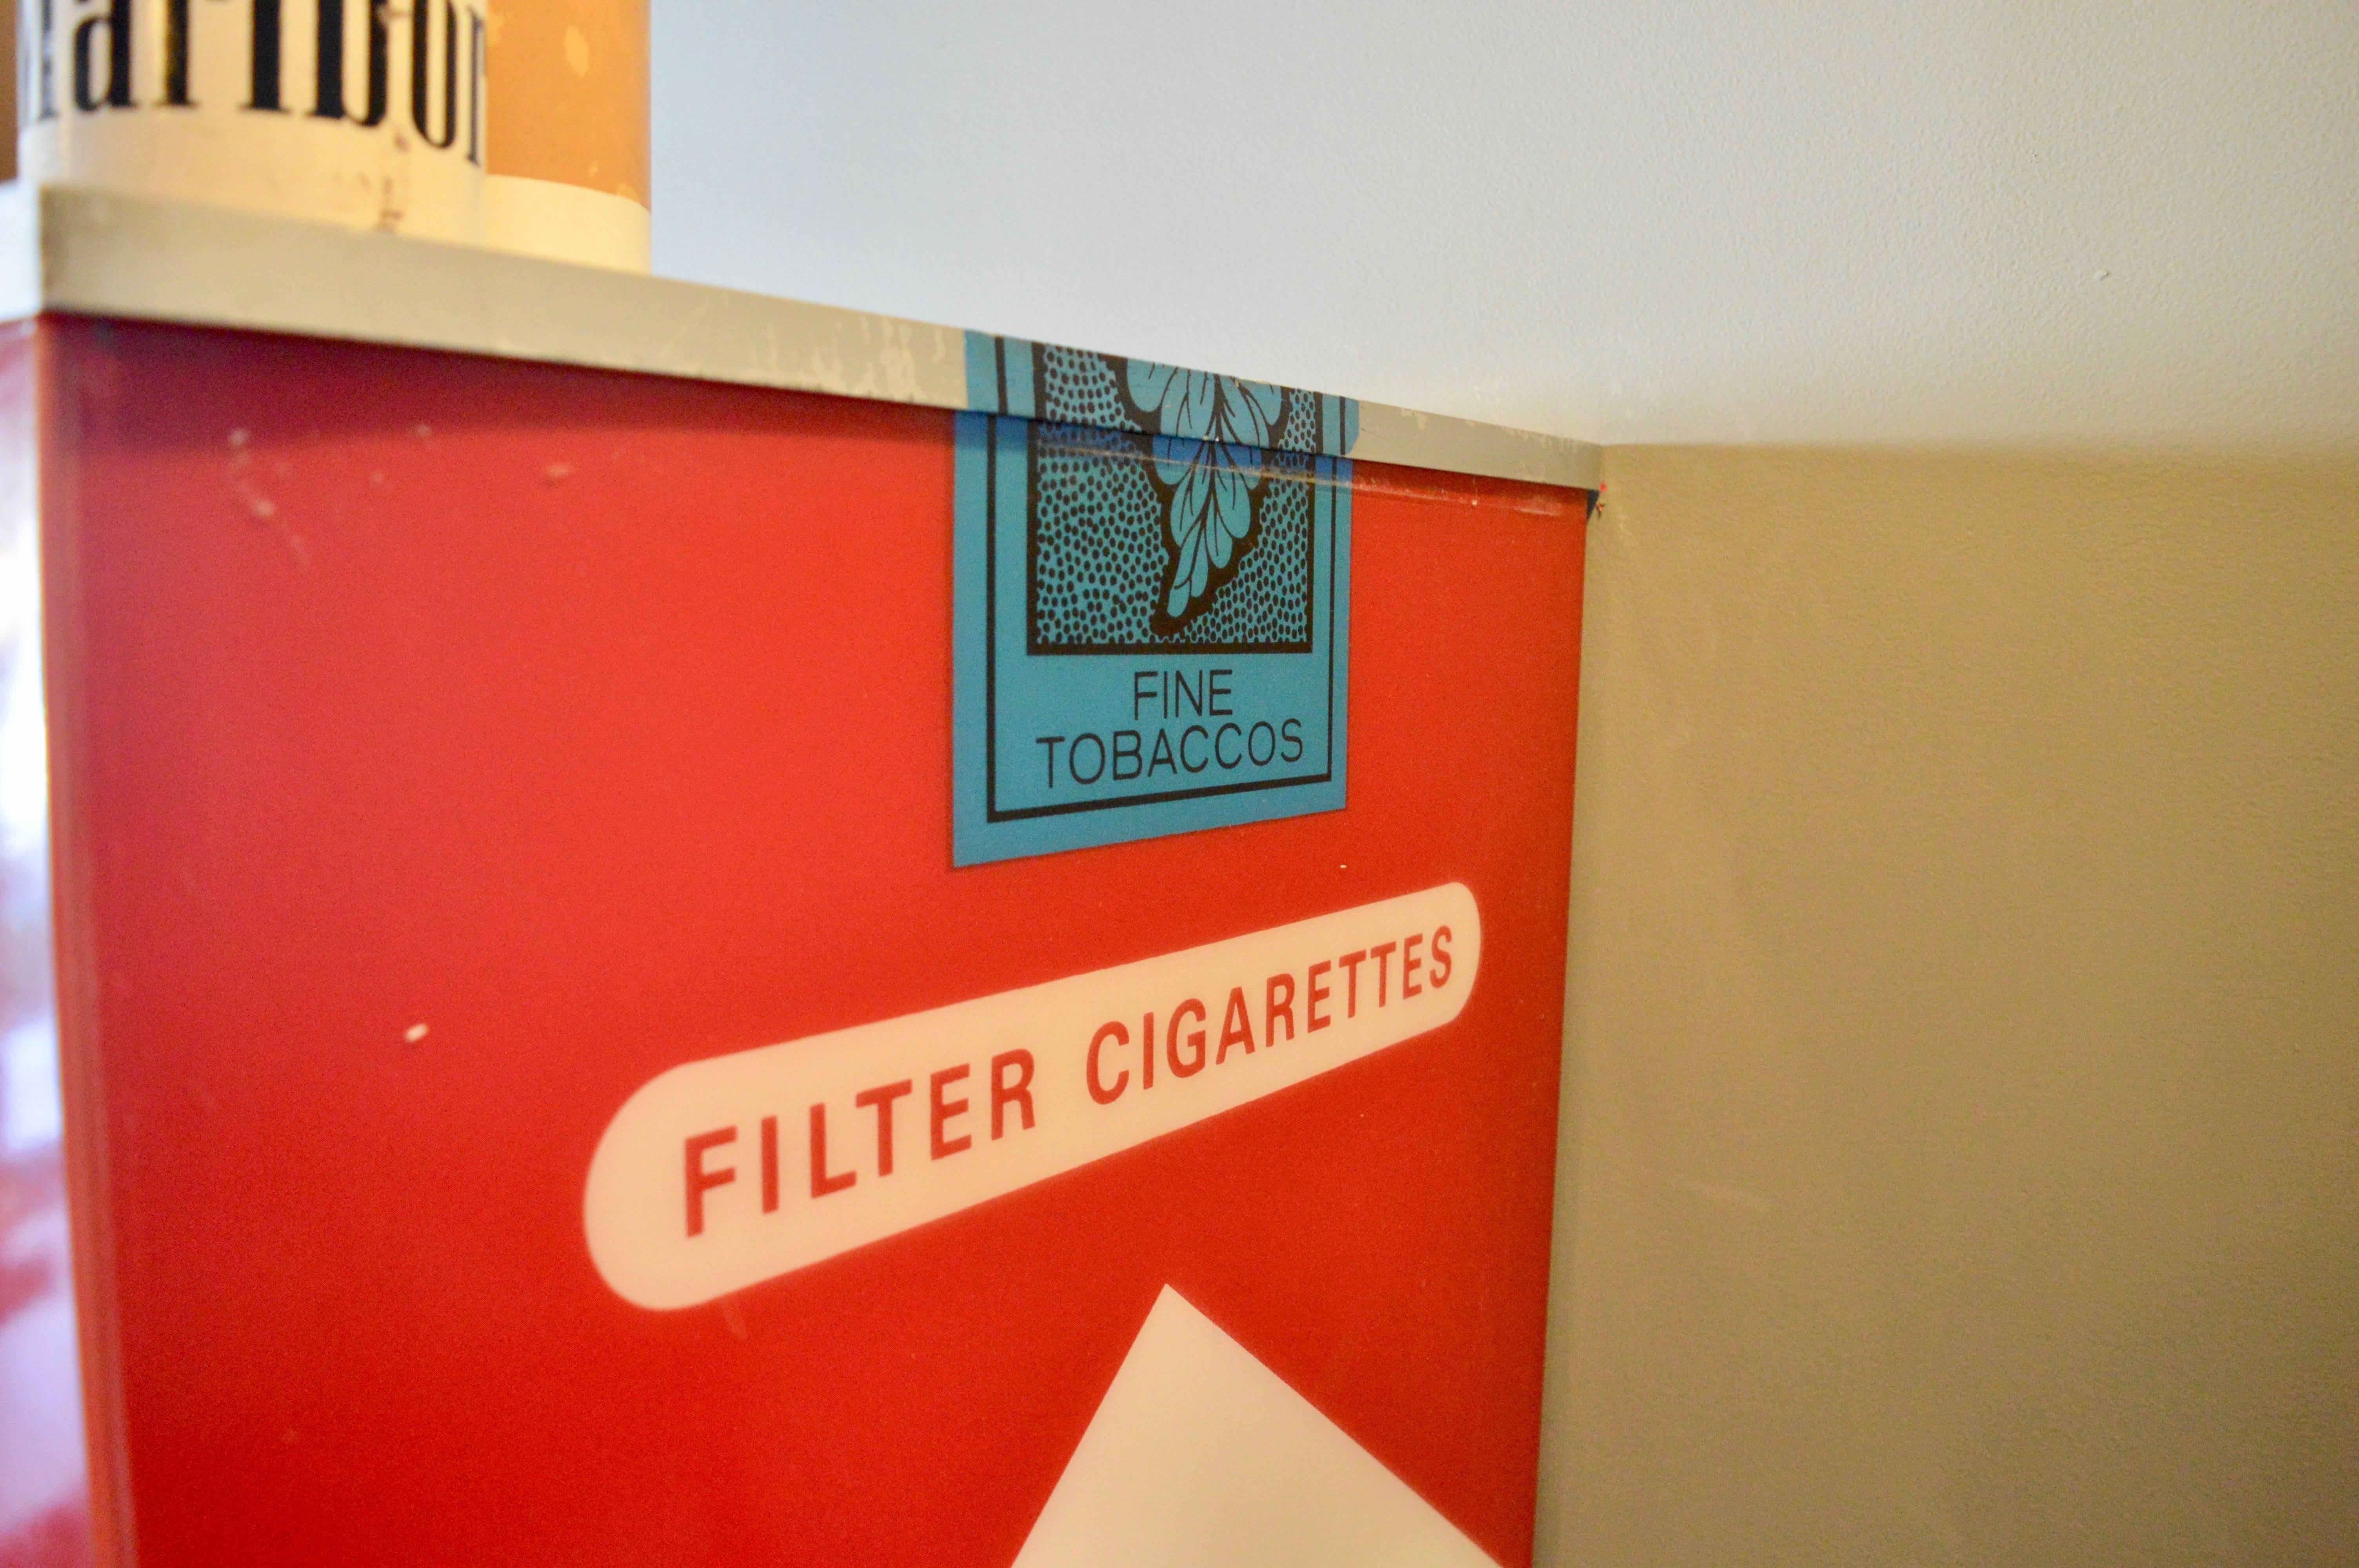 American Massive Vintage Marlboro Light Up Cigarette Pack